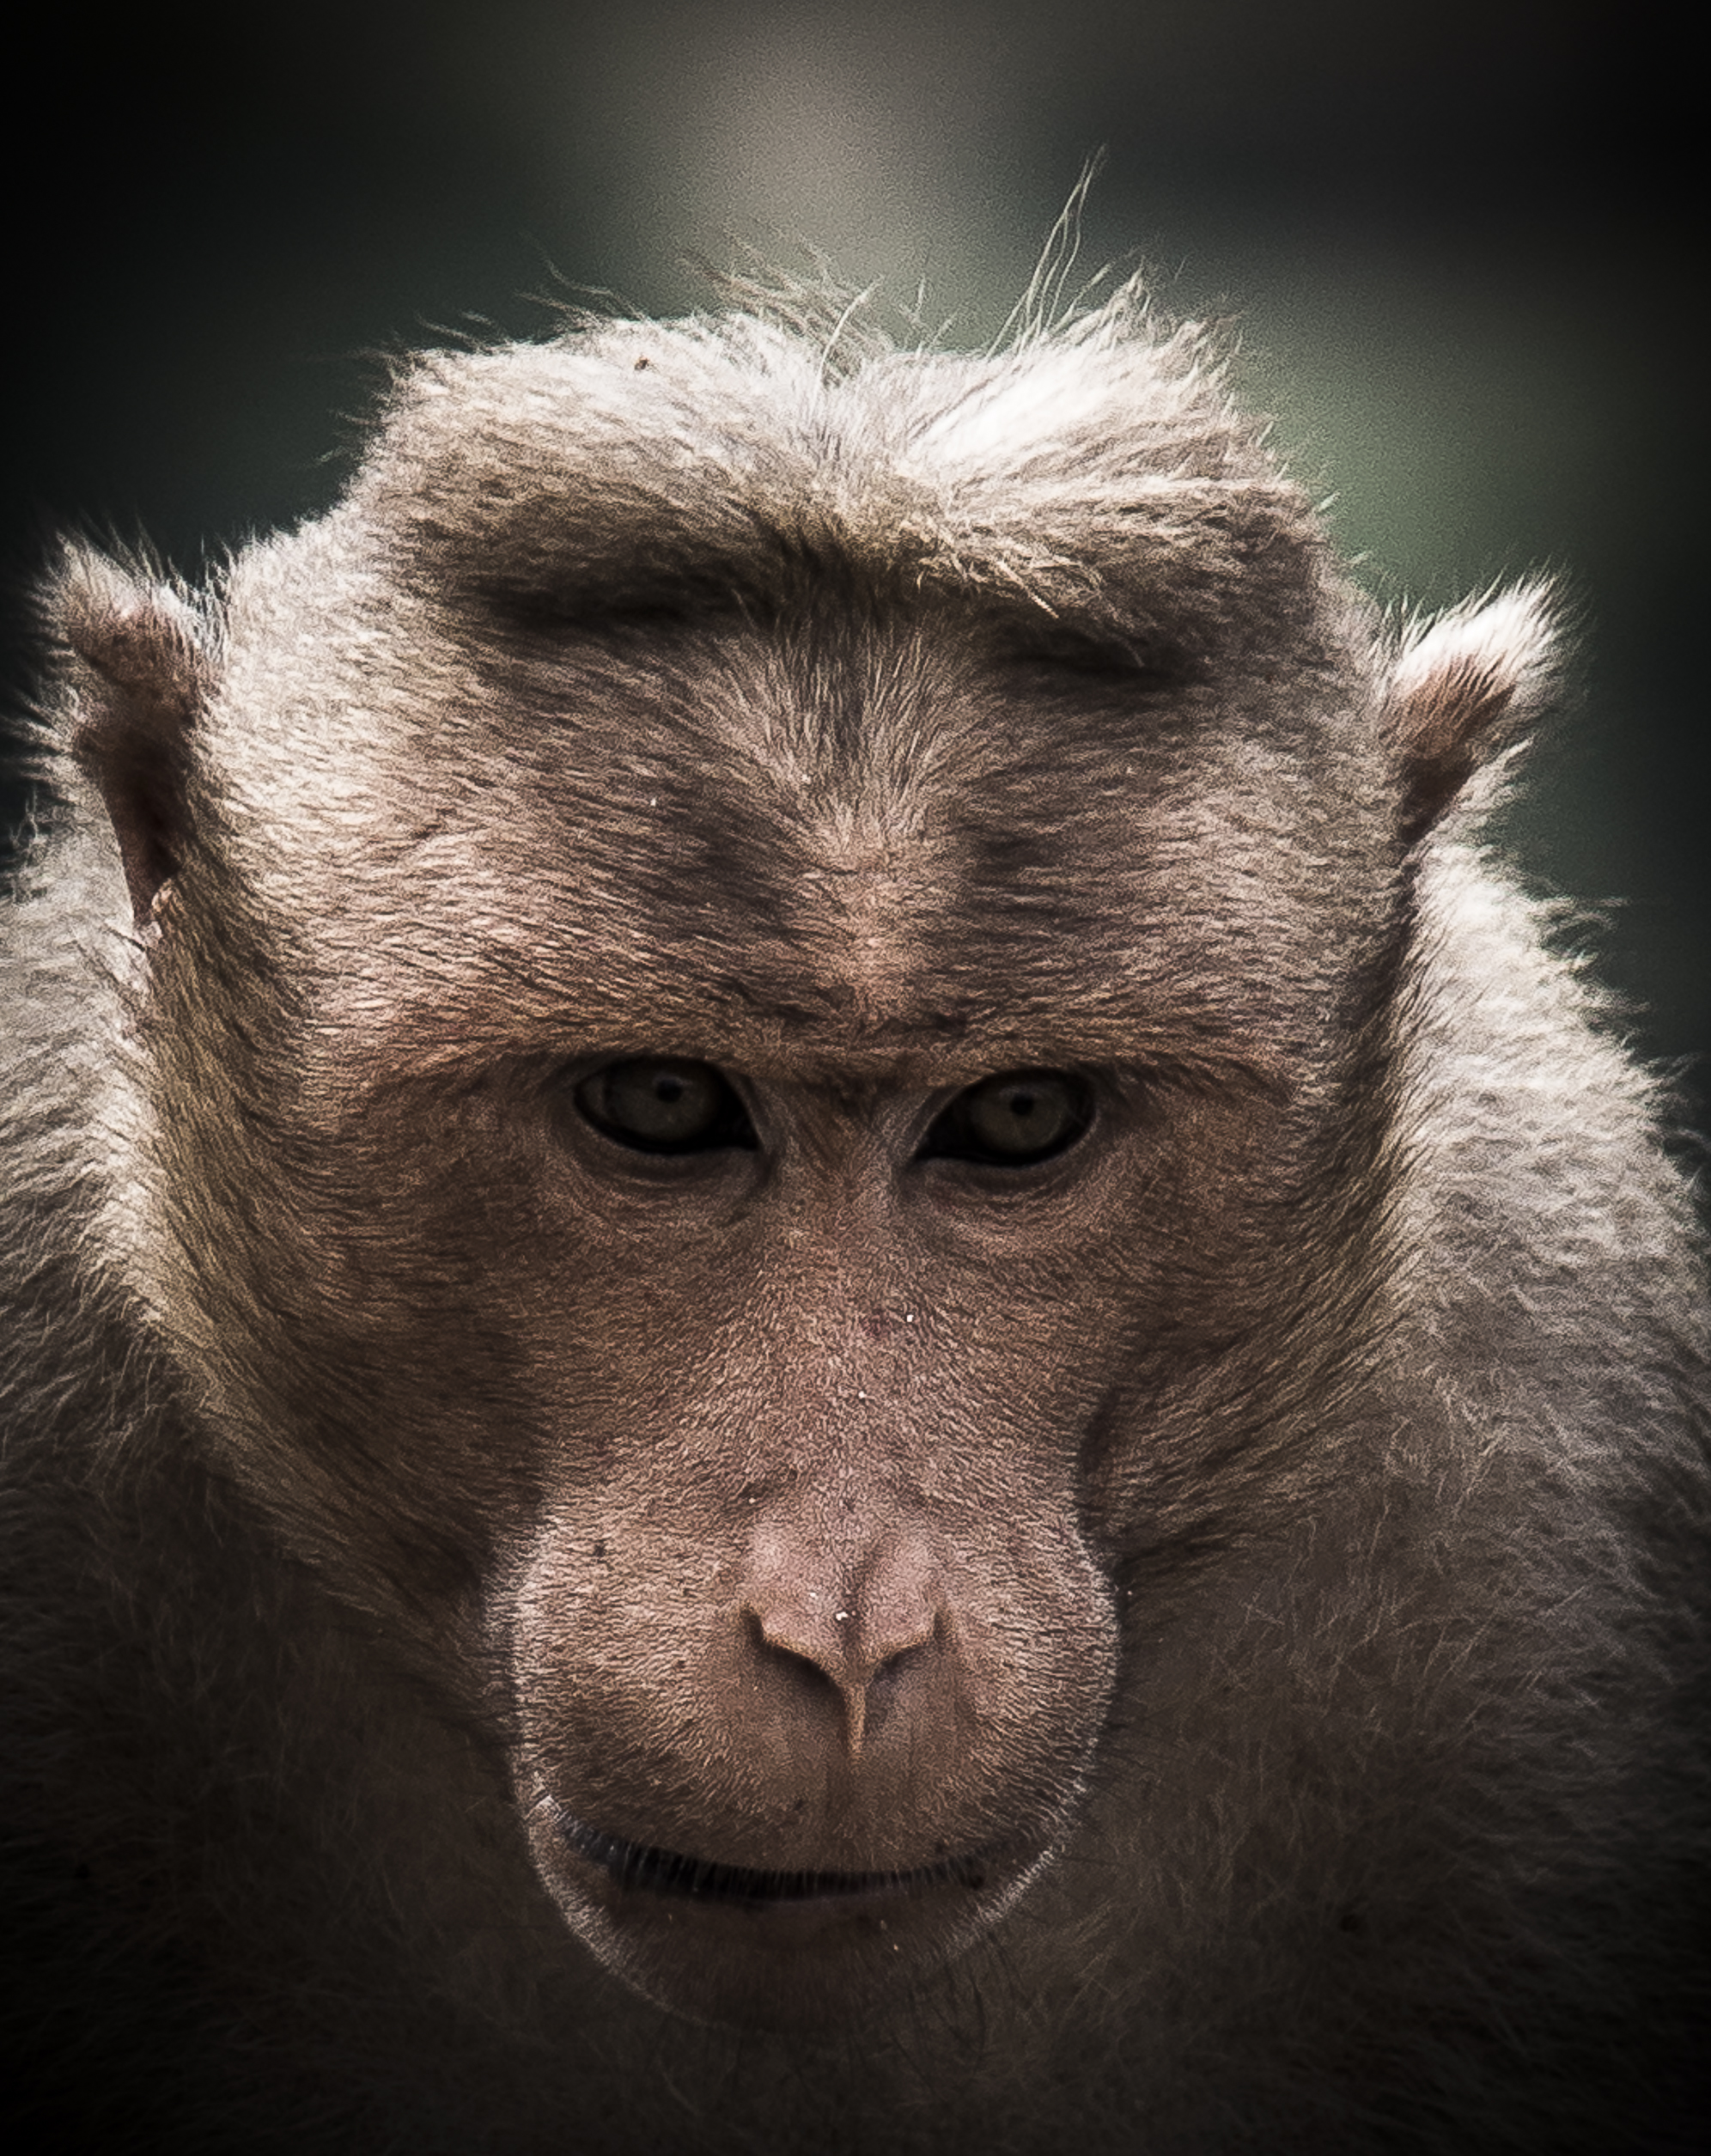 close-up of a monkey